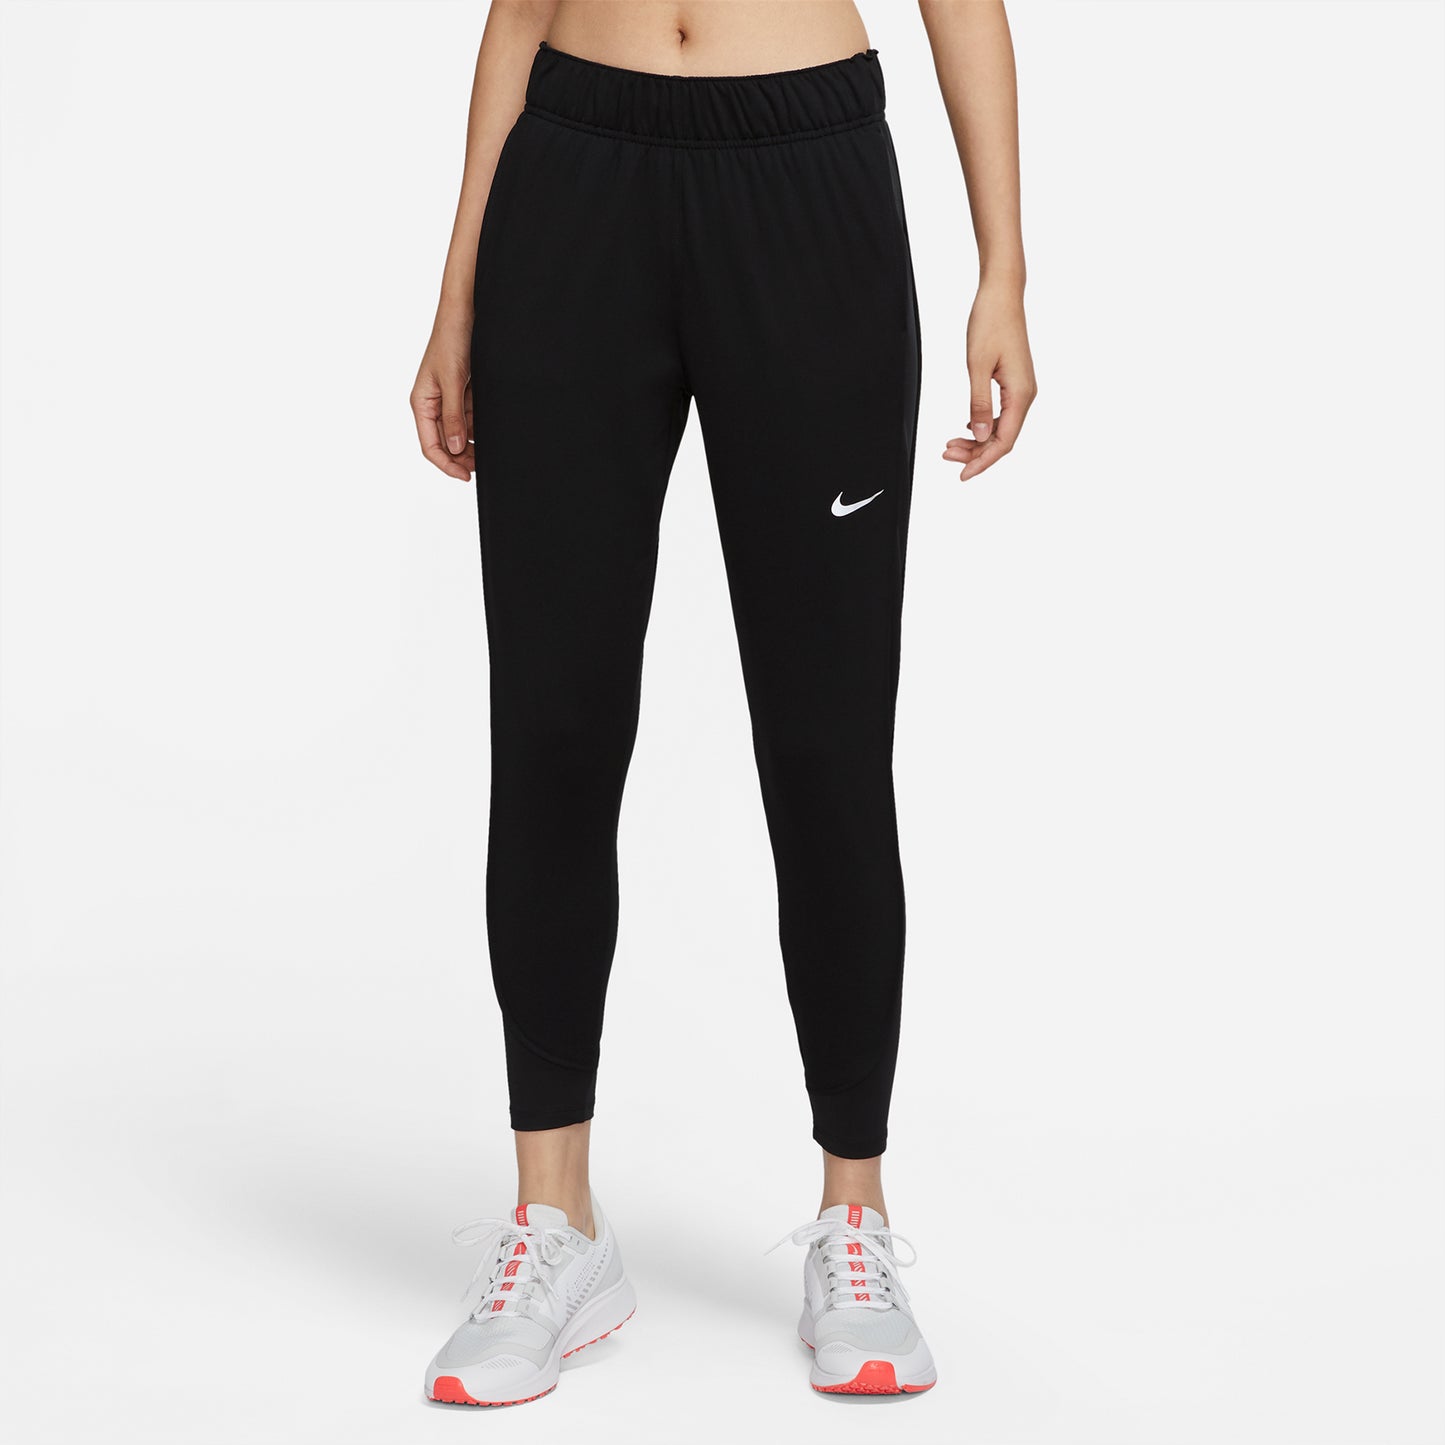  Nike Swift Women's Running Pants - Black (Large